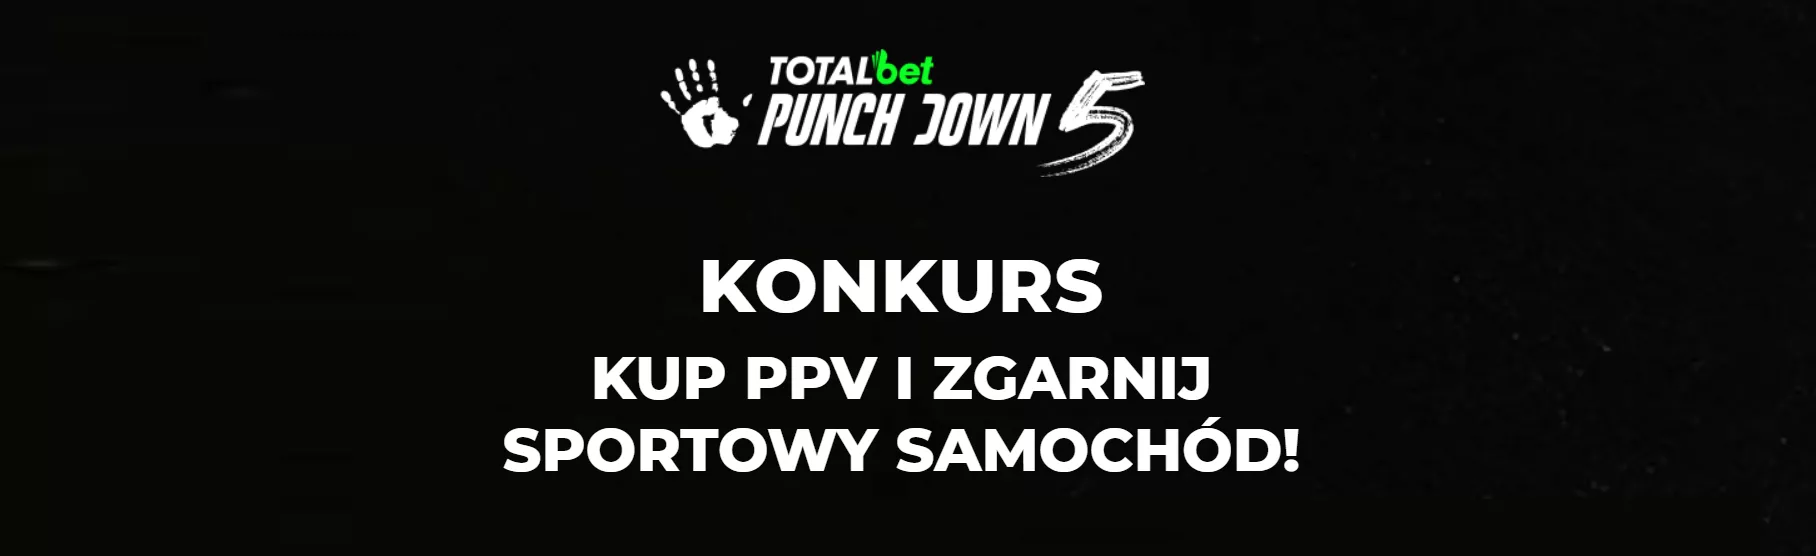 Konkurs na Punchdown 5 - wykup PPV i wygraj samochód. 